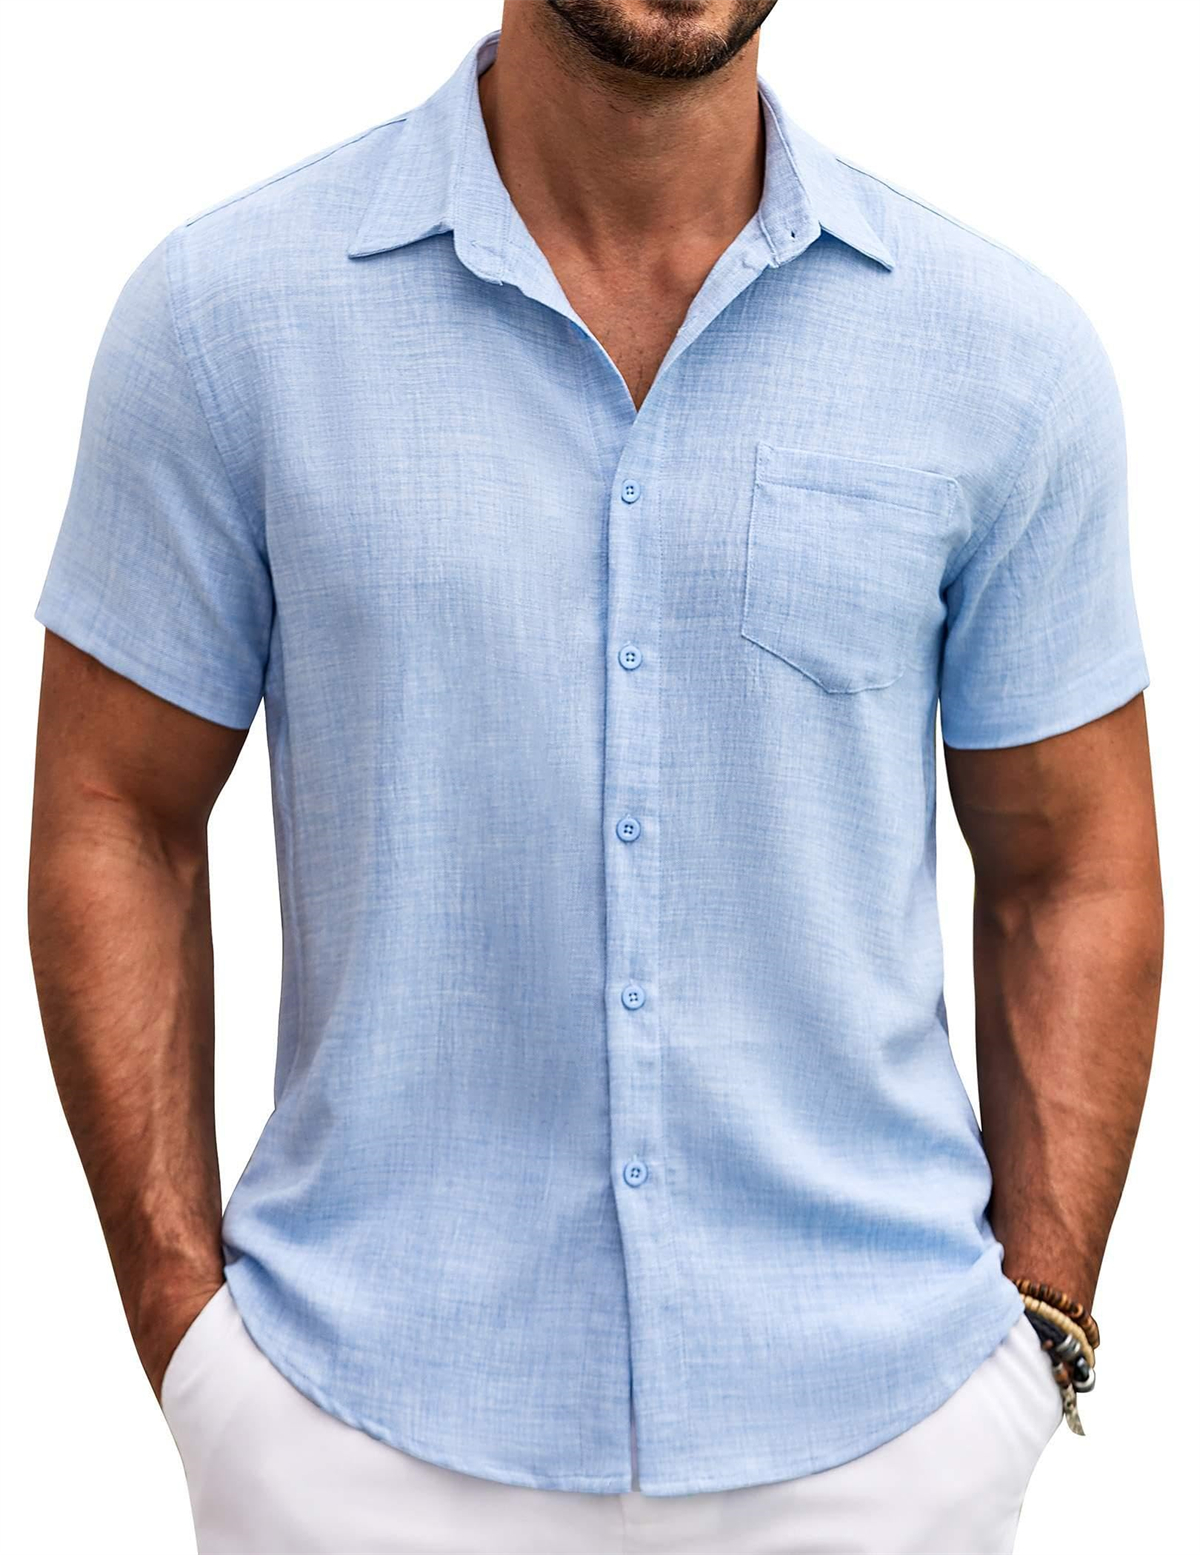 Men's Summer Basic Casual Pocket Short-sleeved Shirt